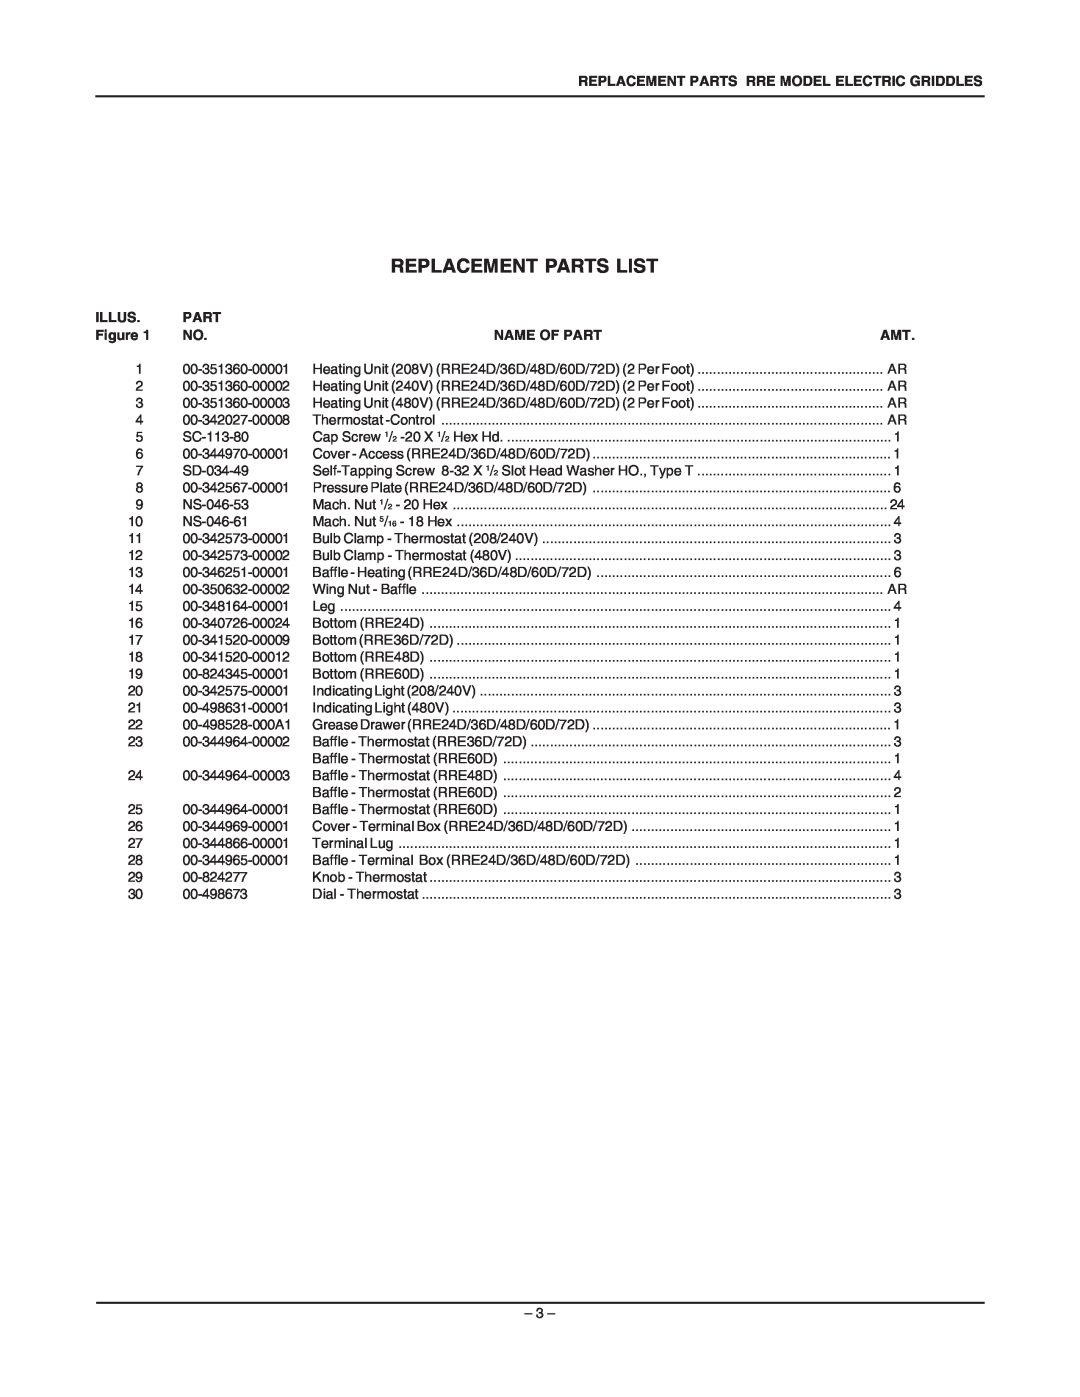 Vulcan-Hart RRE72D, RRE24D manual Replacement Parts List, Replacement Parts Rre Model Electric Griddles, Illus, Name Of Part 